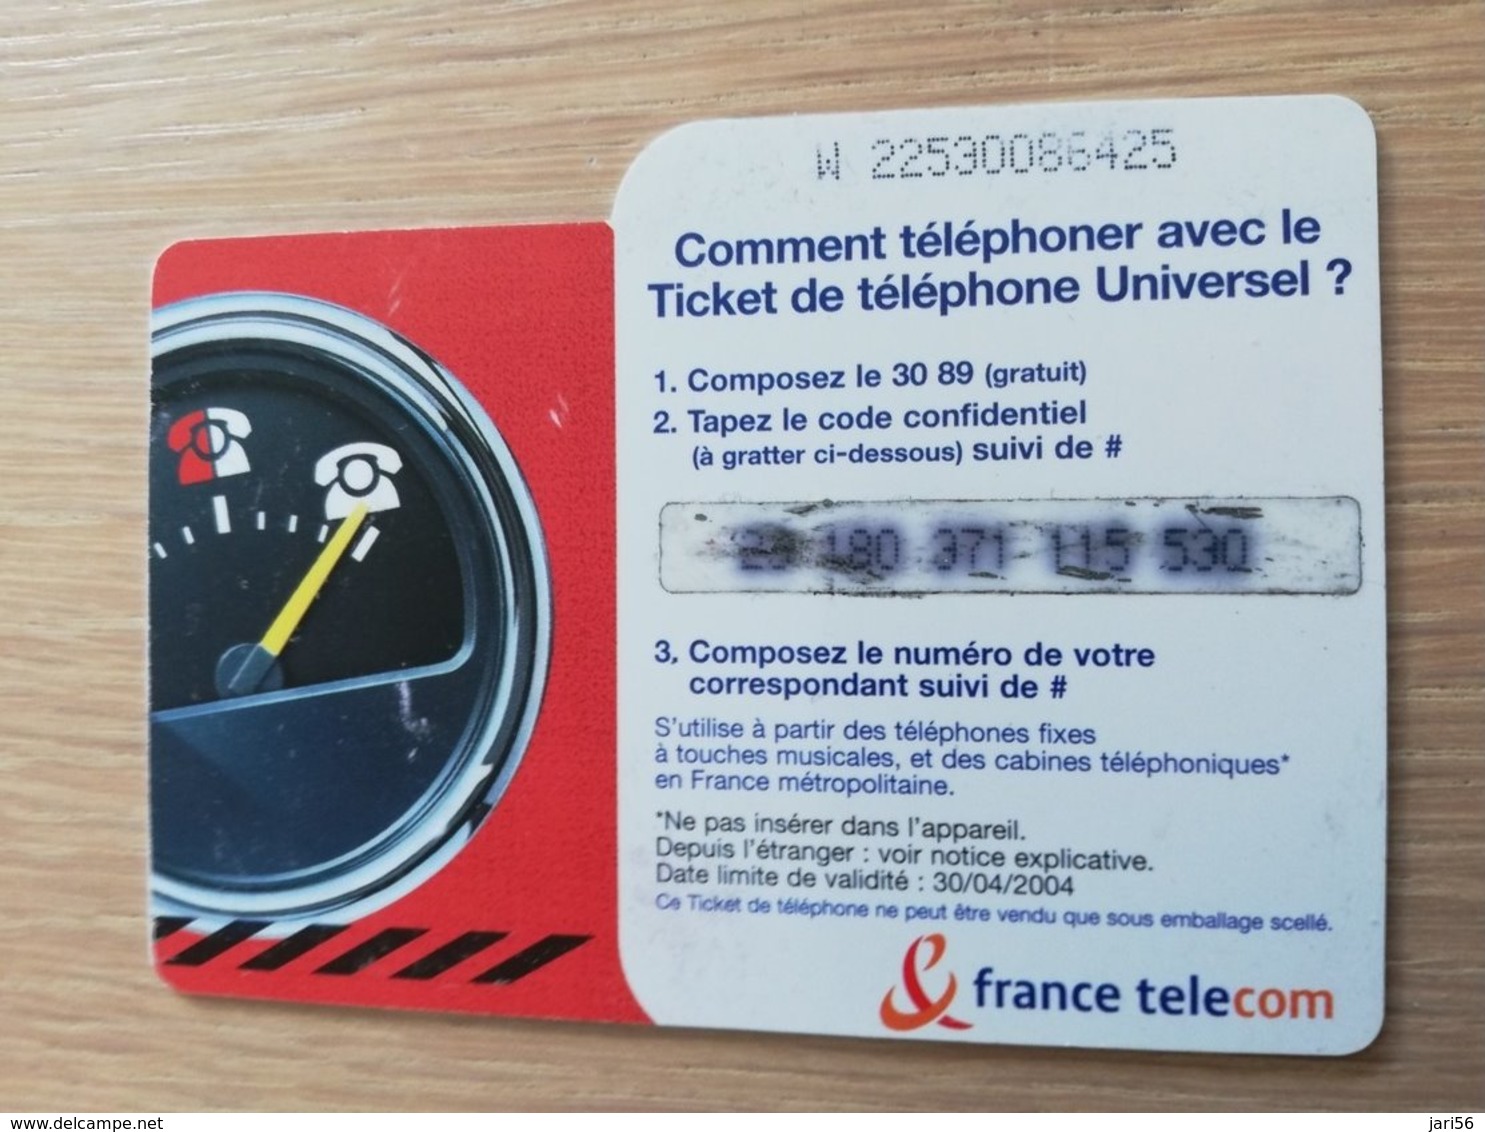 FRANCE/FRANKRIJK   TICKET 15 €   PREPAID  USED    ** 1487** - Per Cellulari (telefonini/schede SIM)